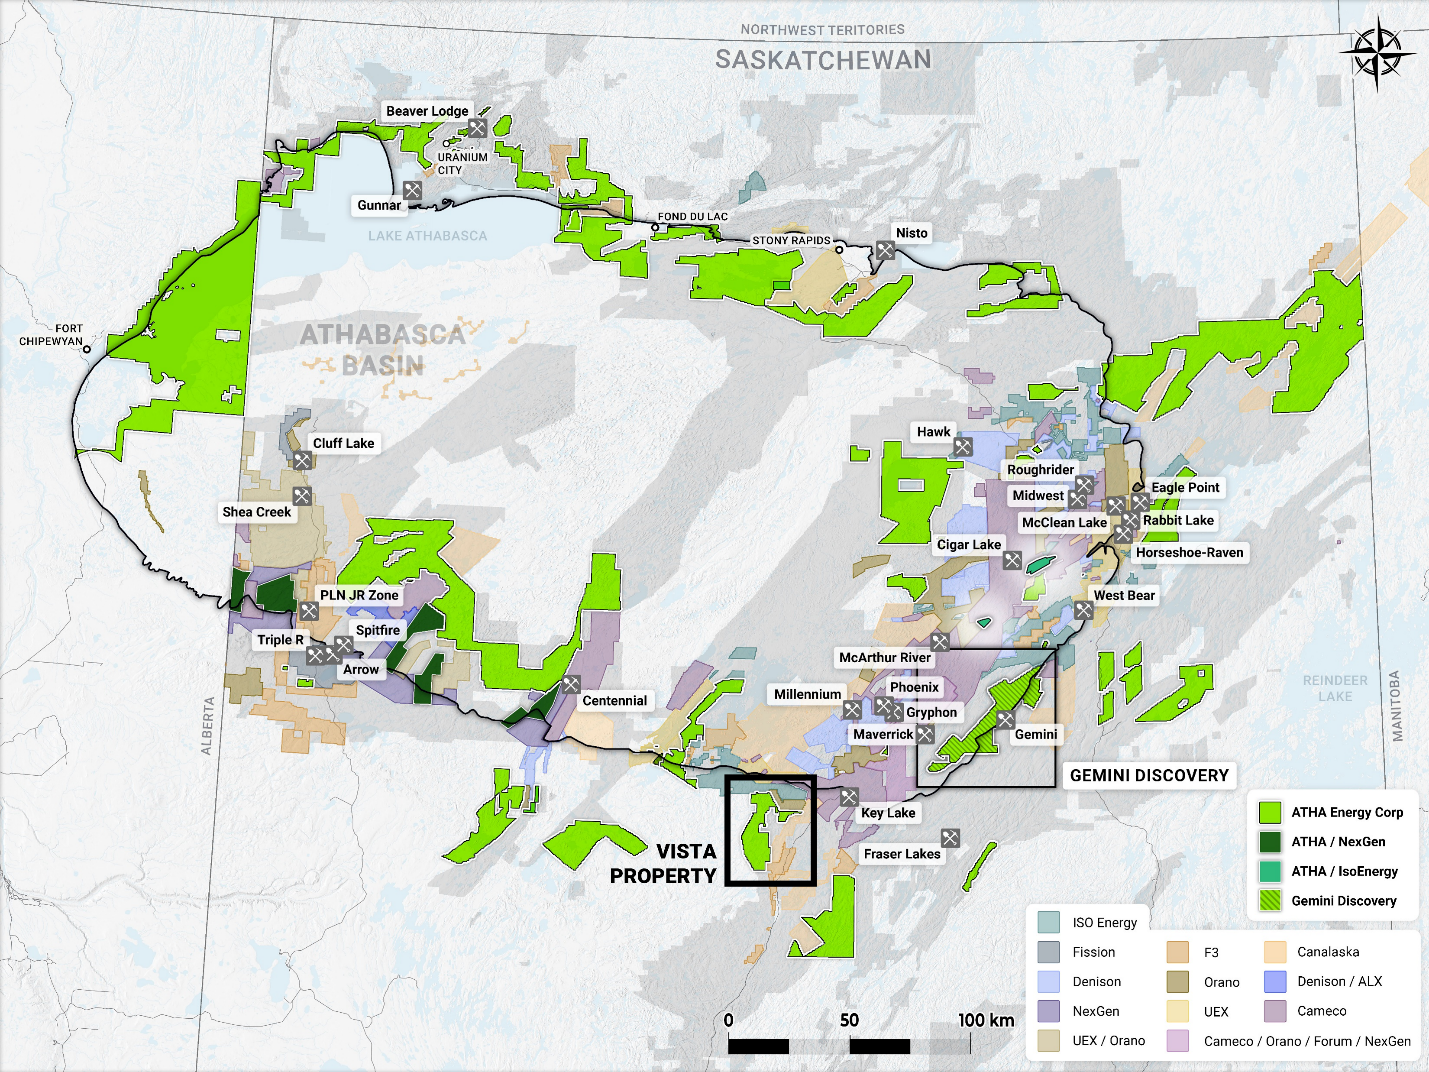 Vista Property relative to ATHA’s Athabasca Basin land claims